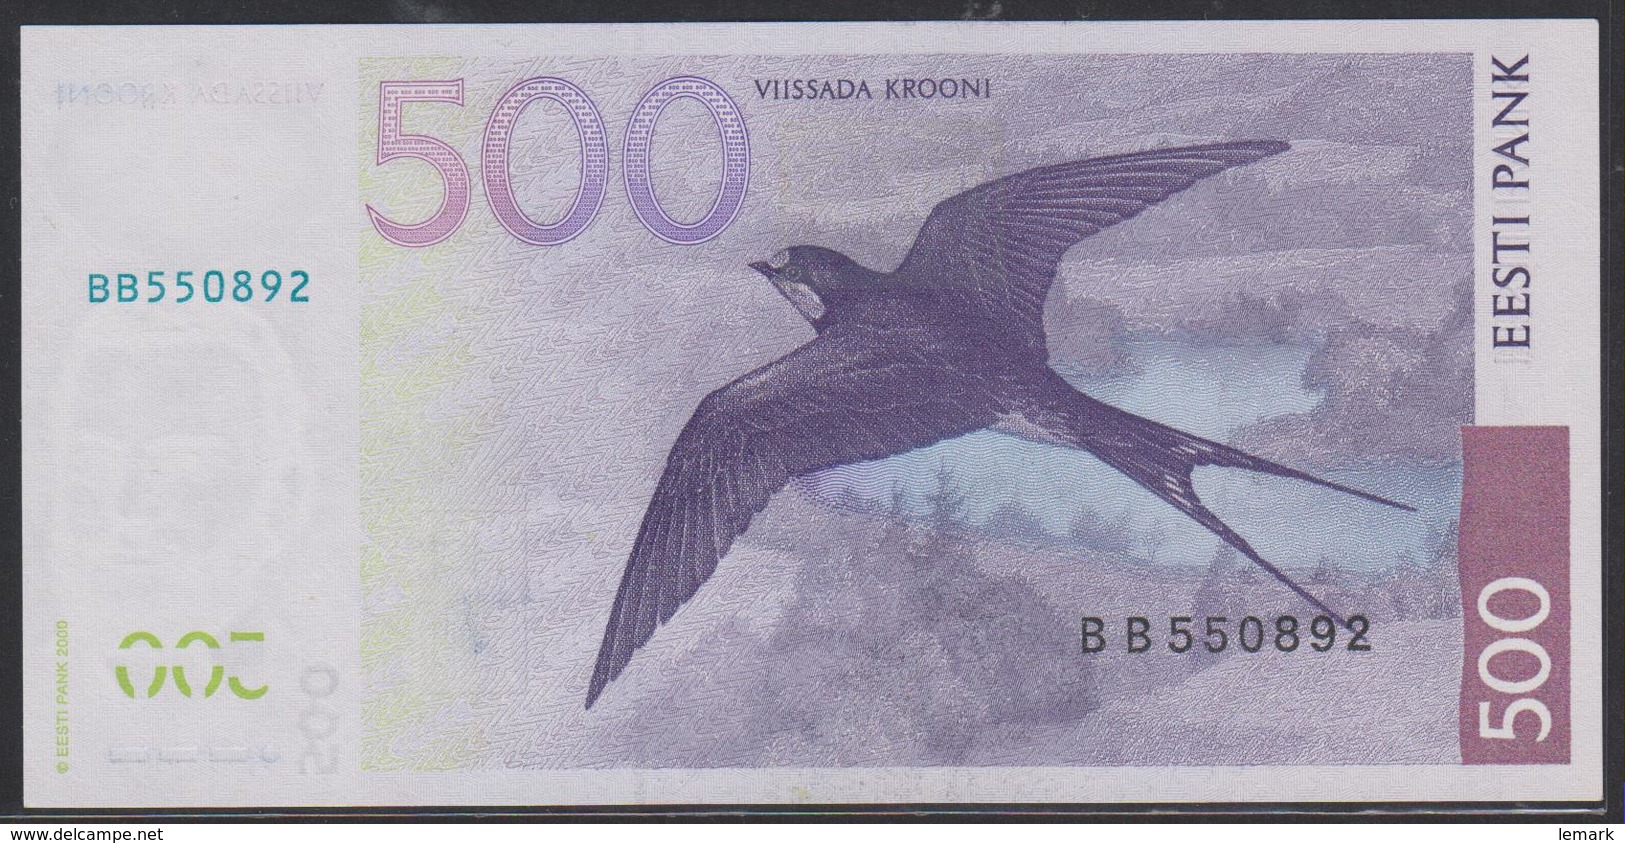 Estonia 500 Krooni 2000 P83 UNC - Estonia